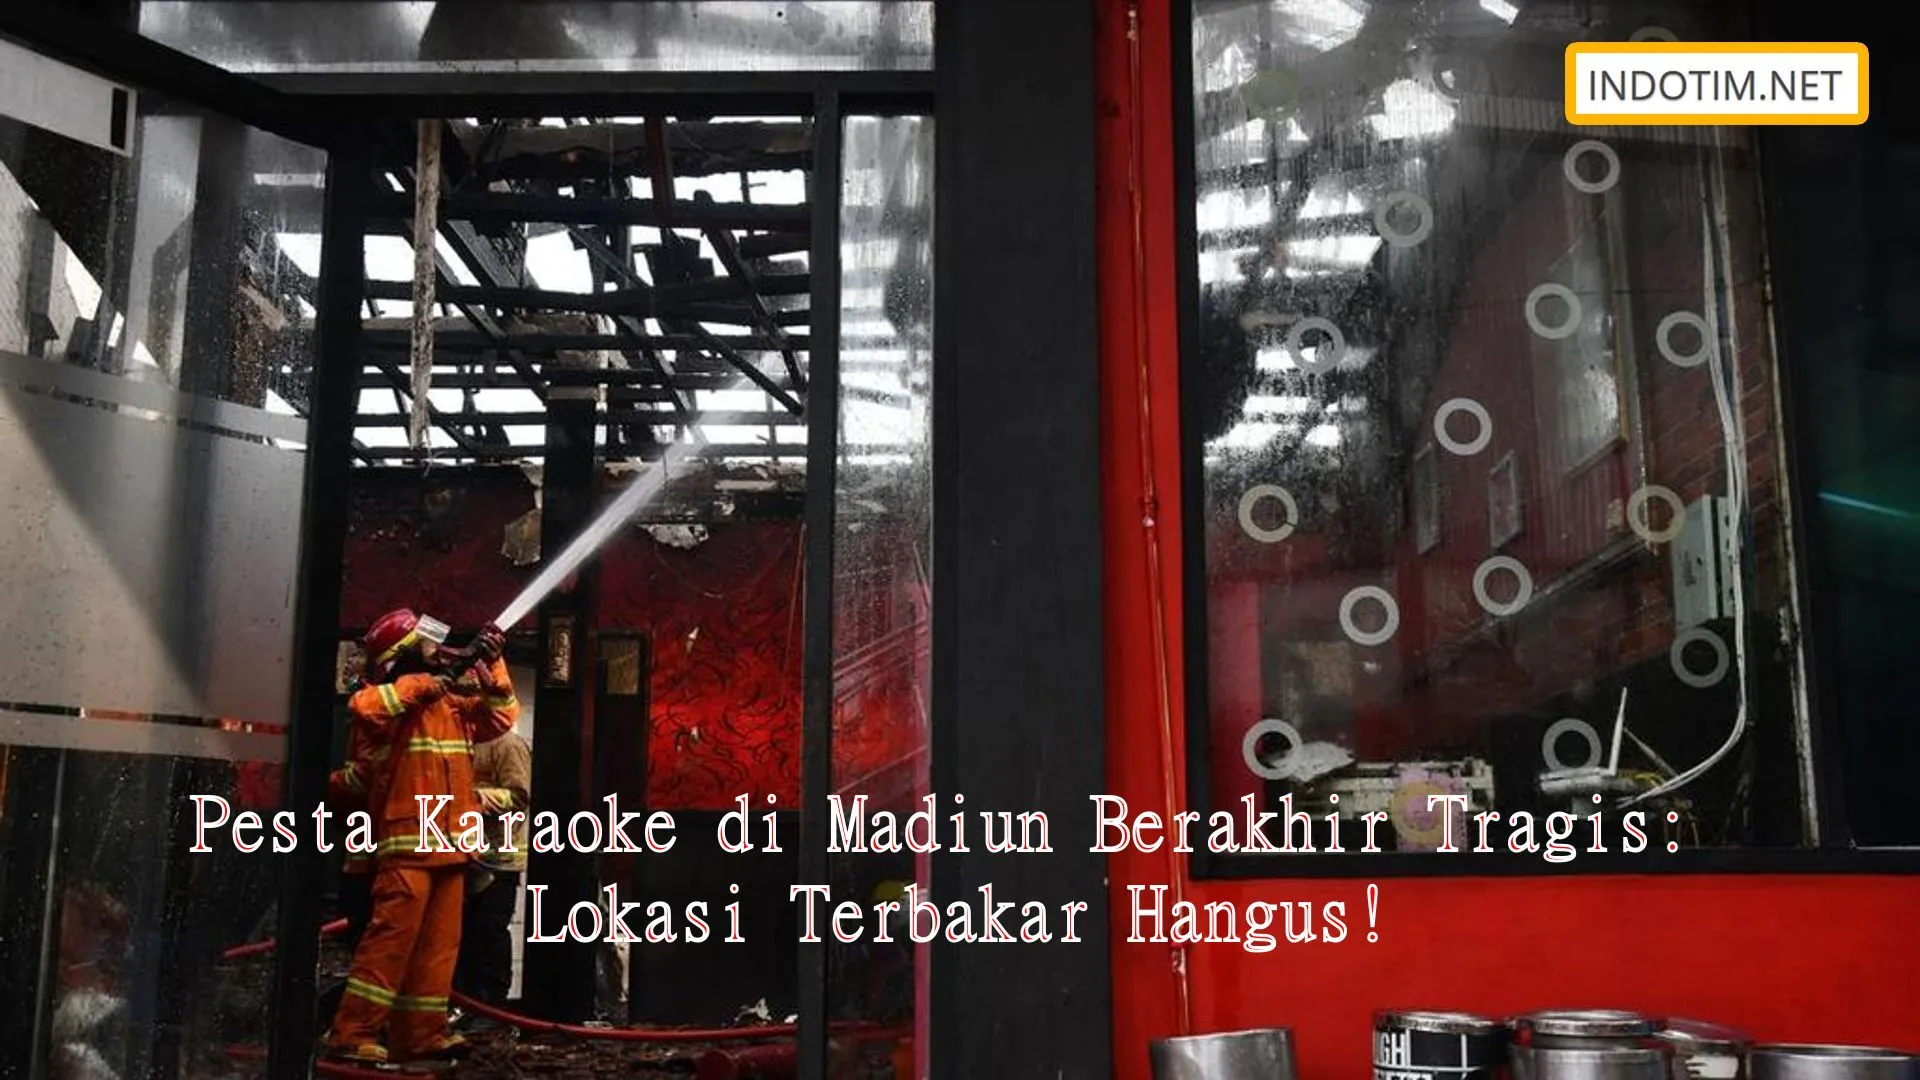 Pesta Karaoke di Madiun Berakhir Tragis: Lokasi Terbakar Hangus!